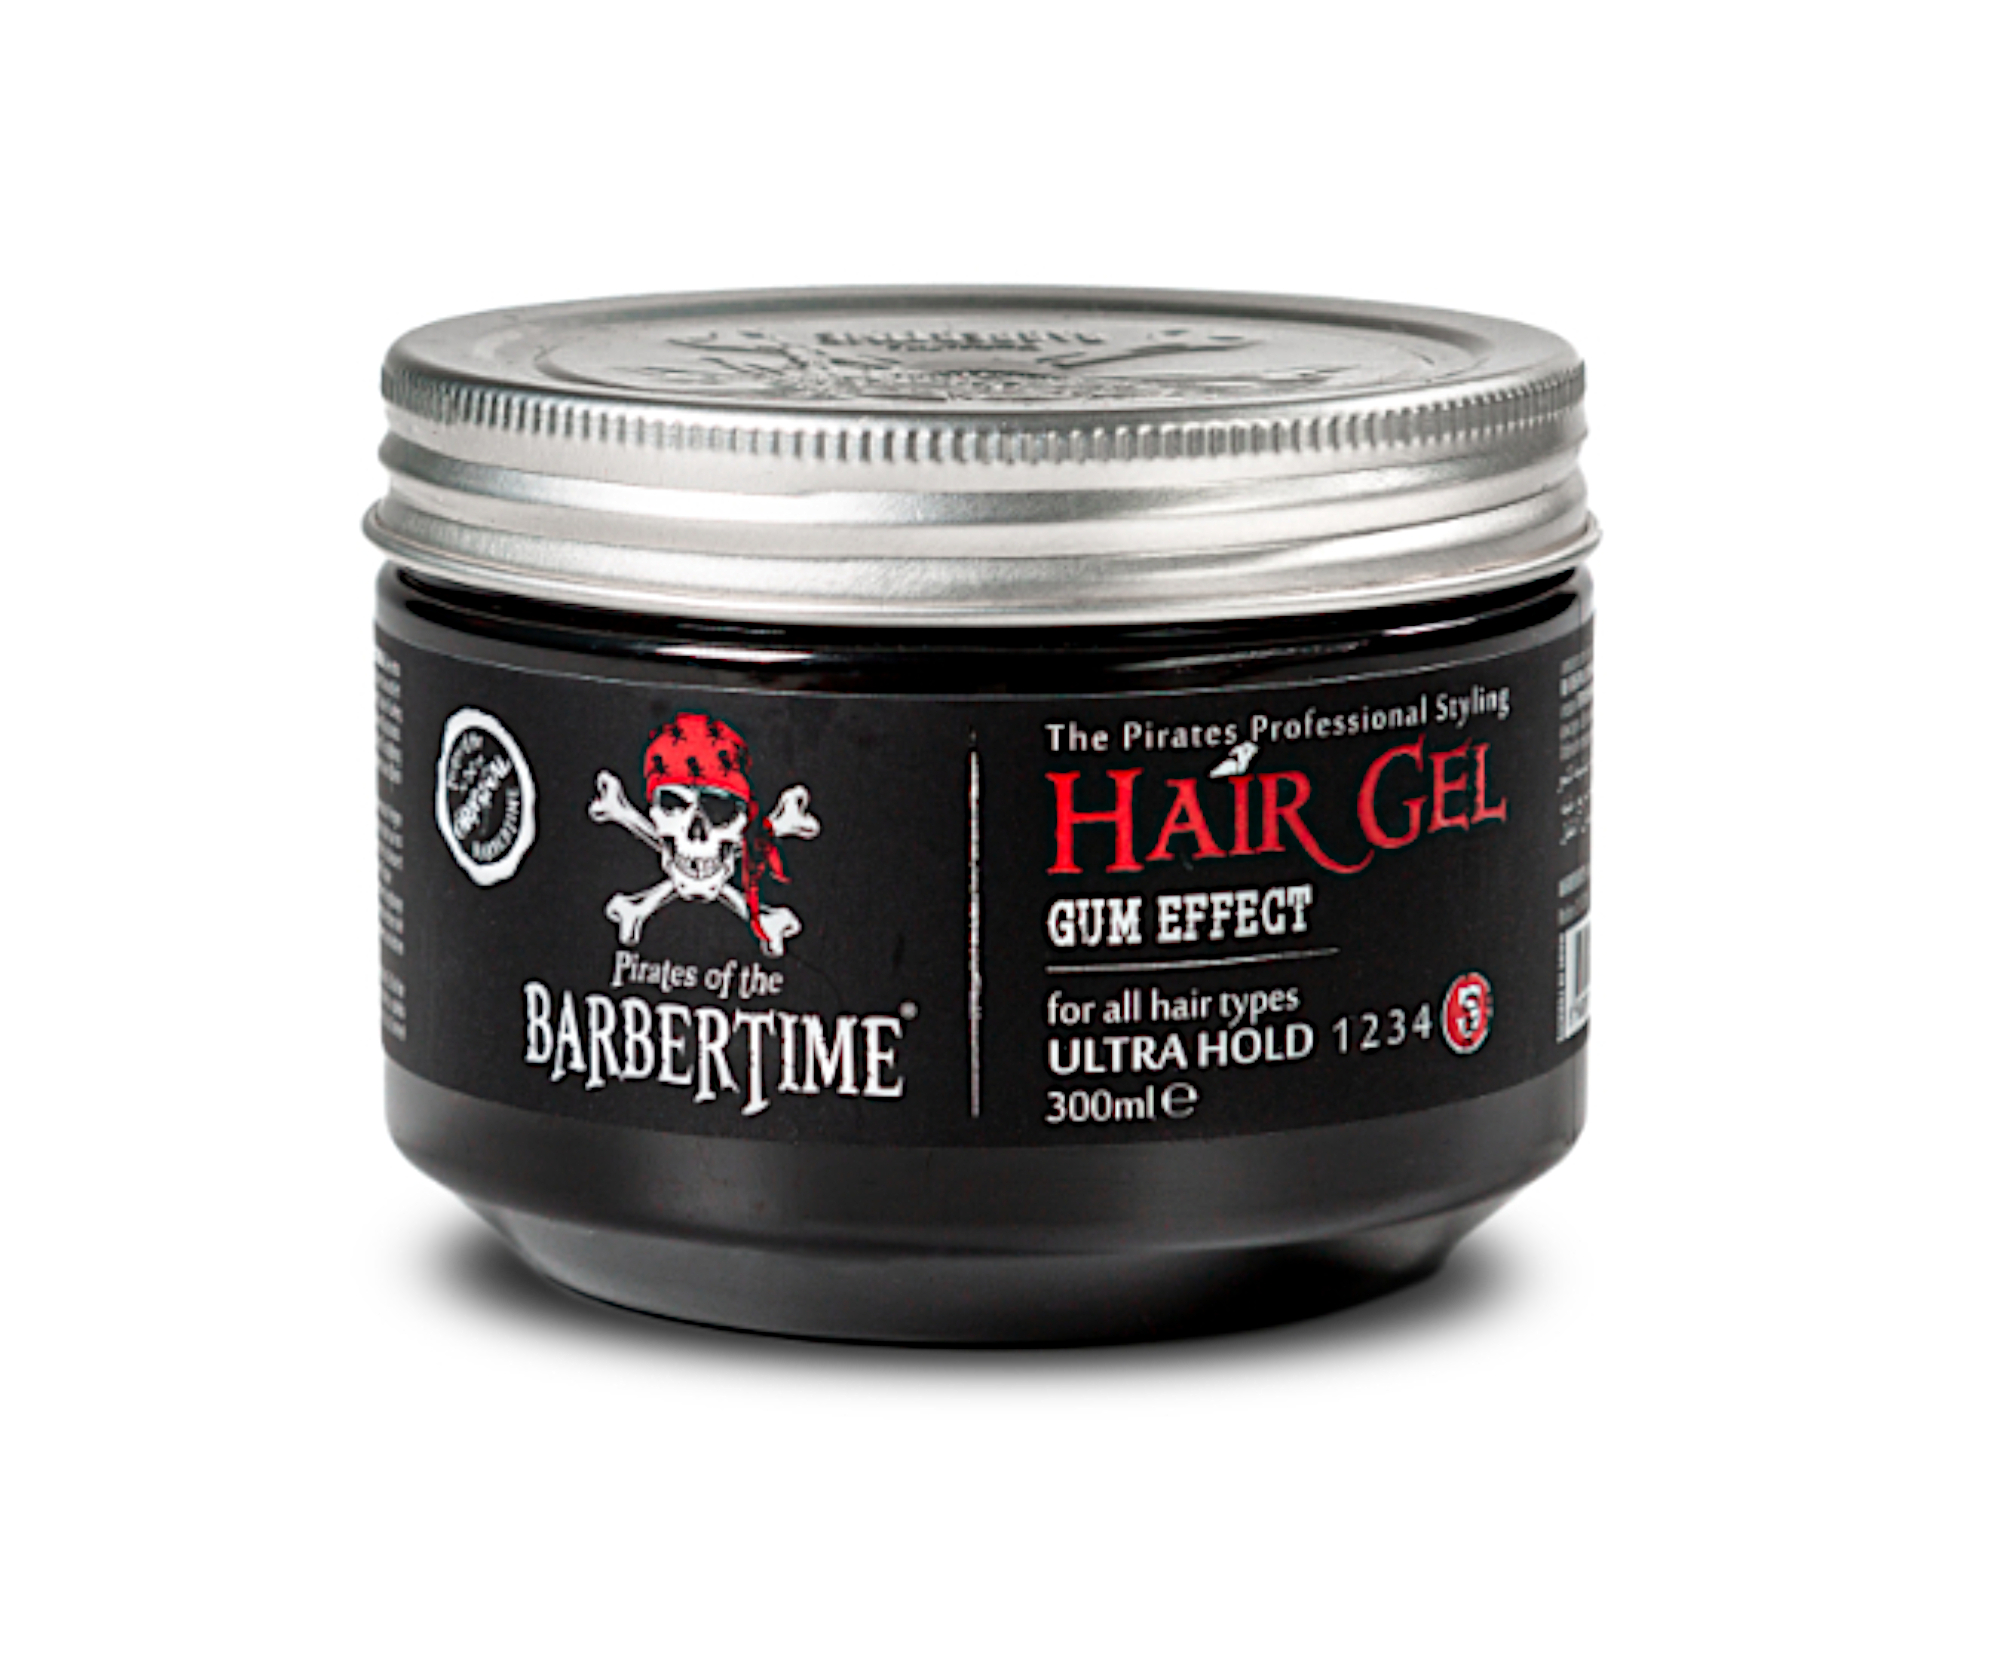 Gel na vlasy s gumovým efektem s maximální fixací Barbertime Hair Gel Gum Effect - 300 ml - Pirates of the Barbertime + dárek zdarma